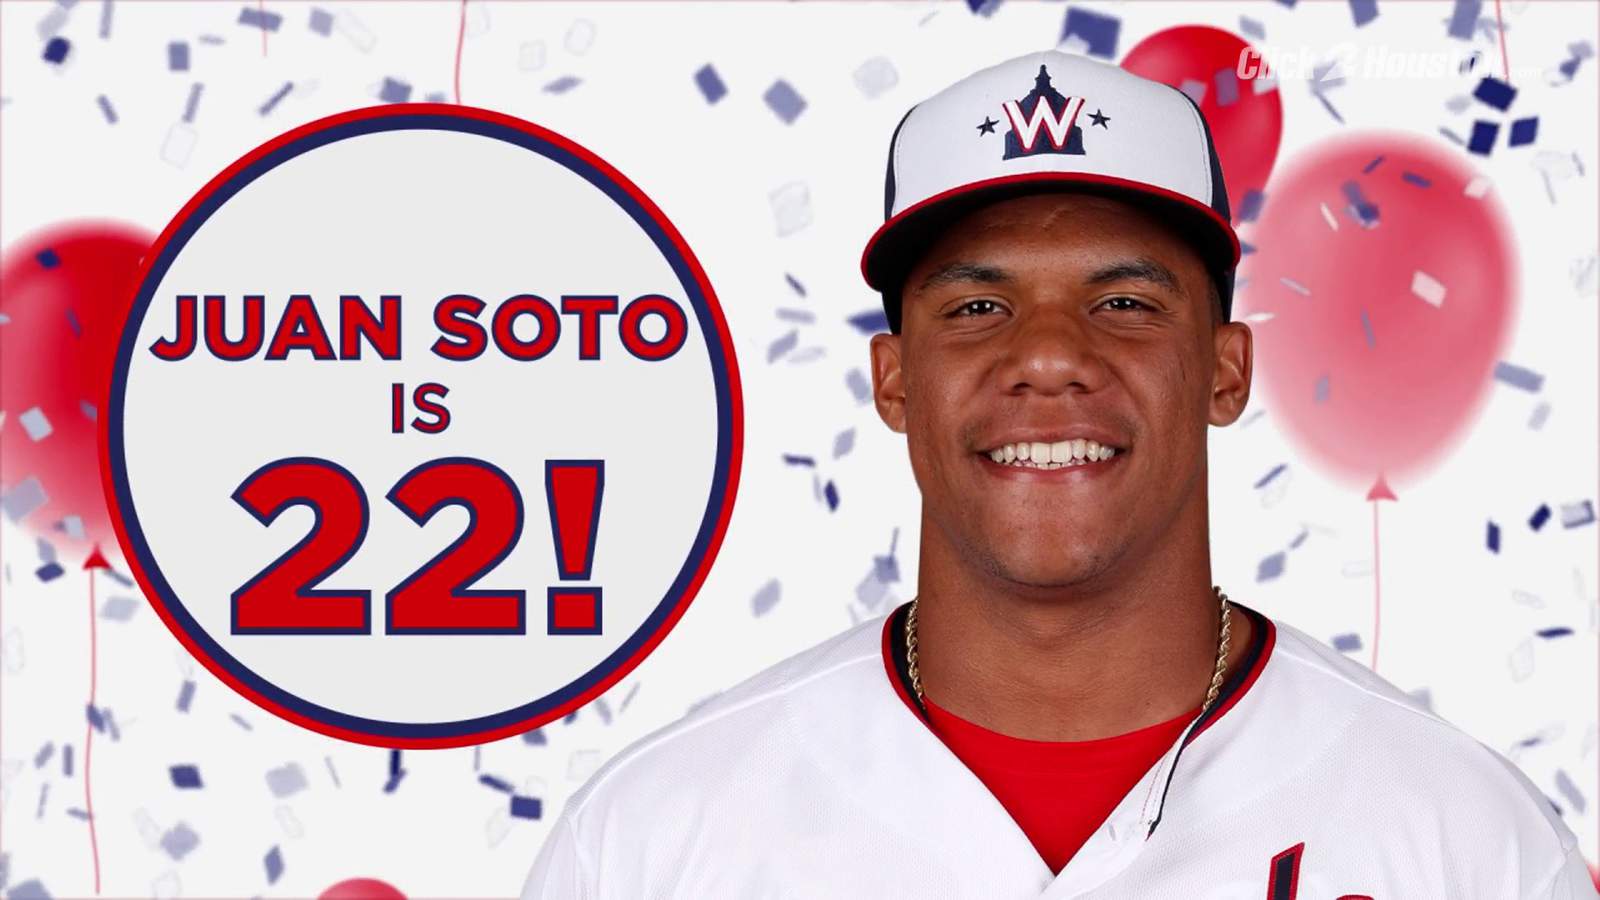 Juan Soto is (finally) no longer 21 years old